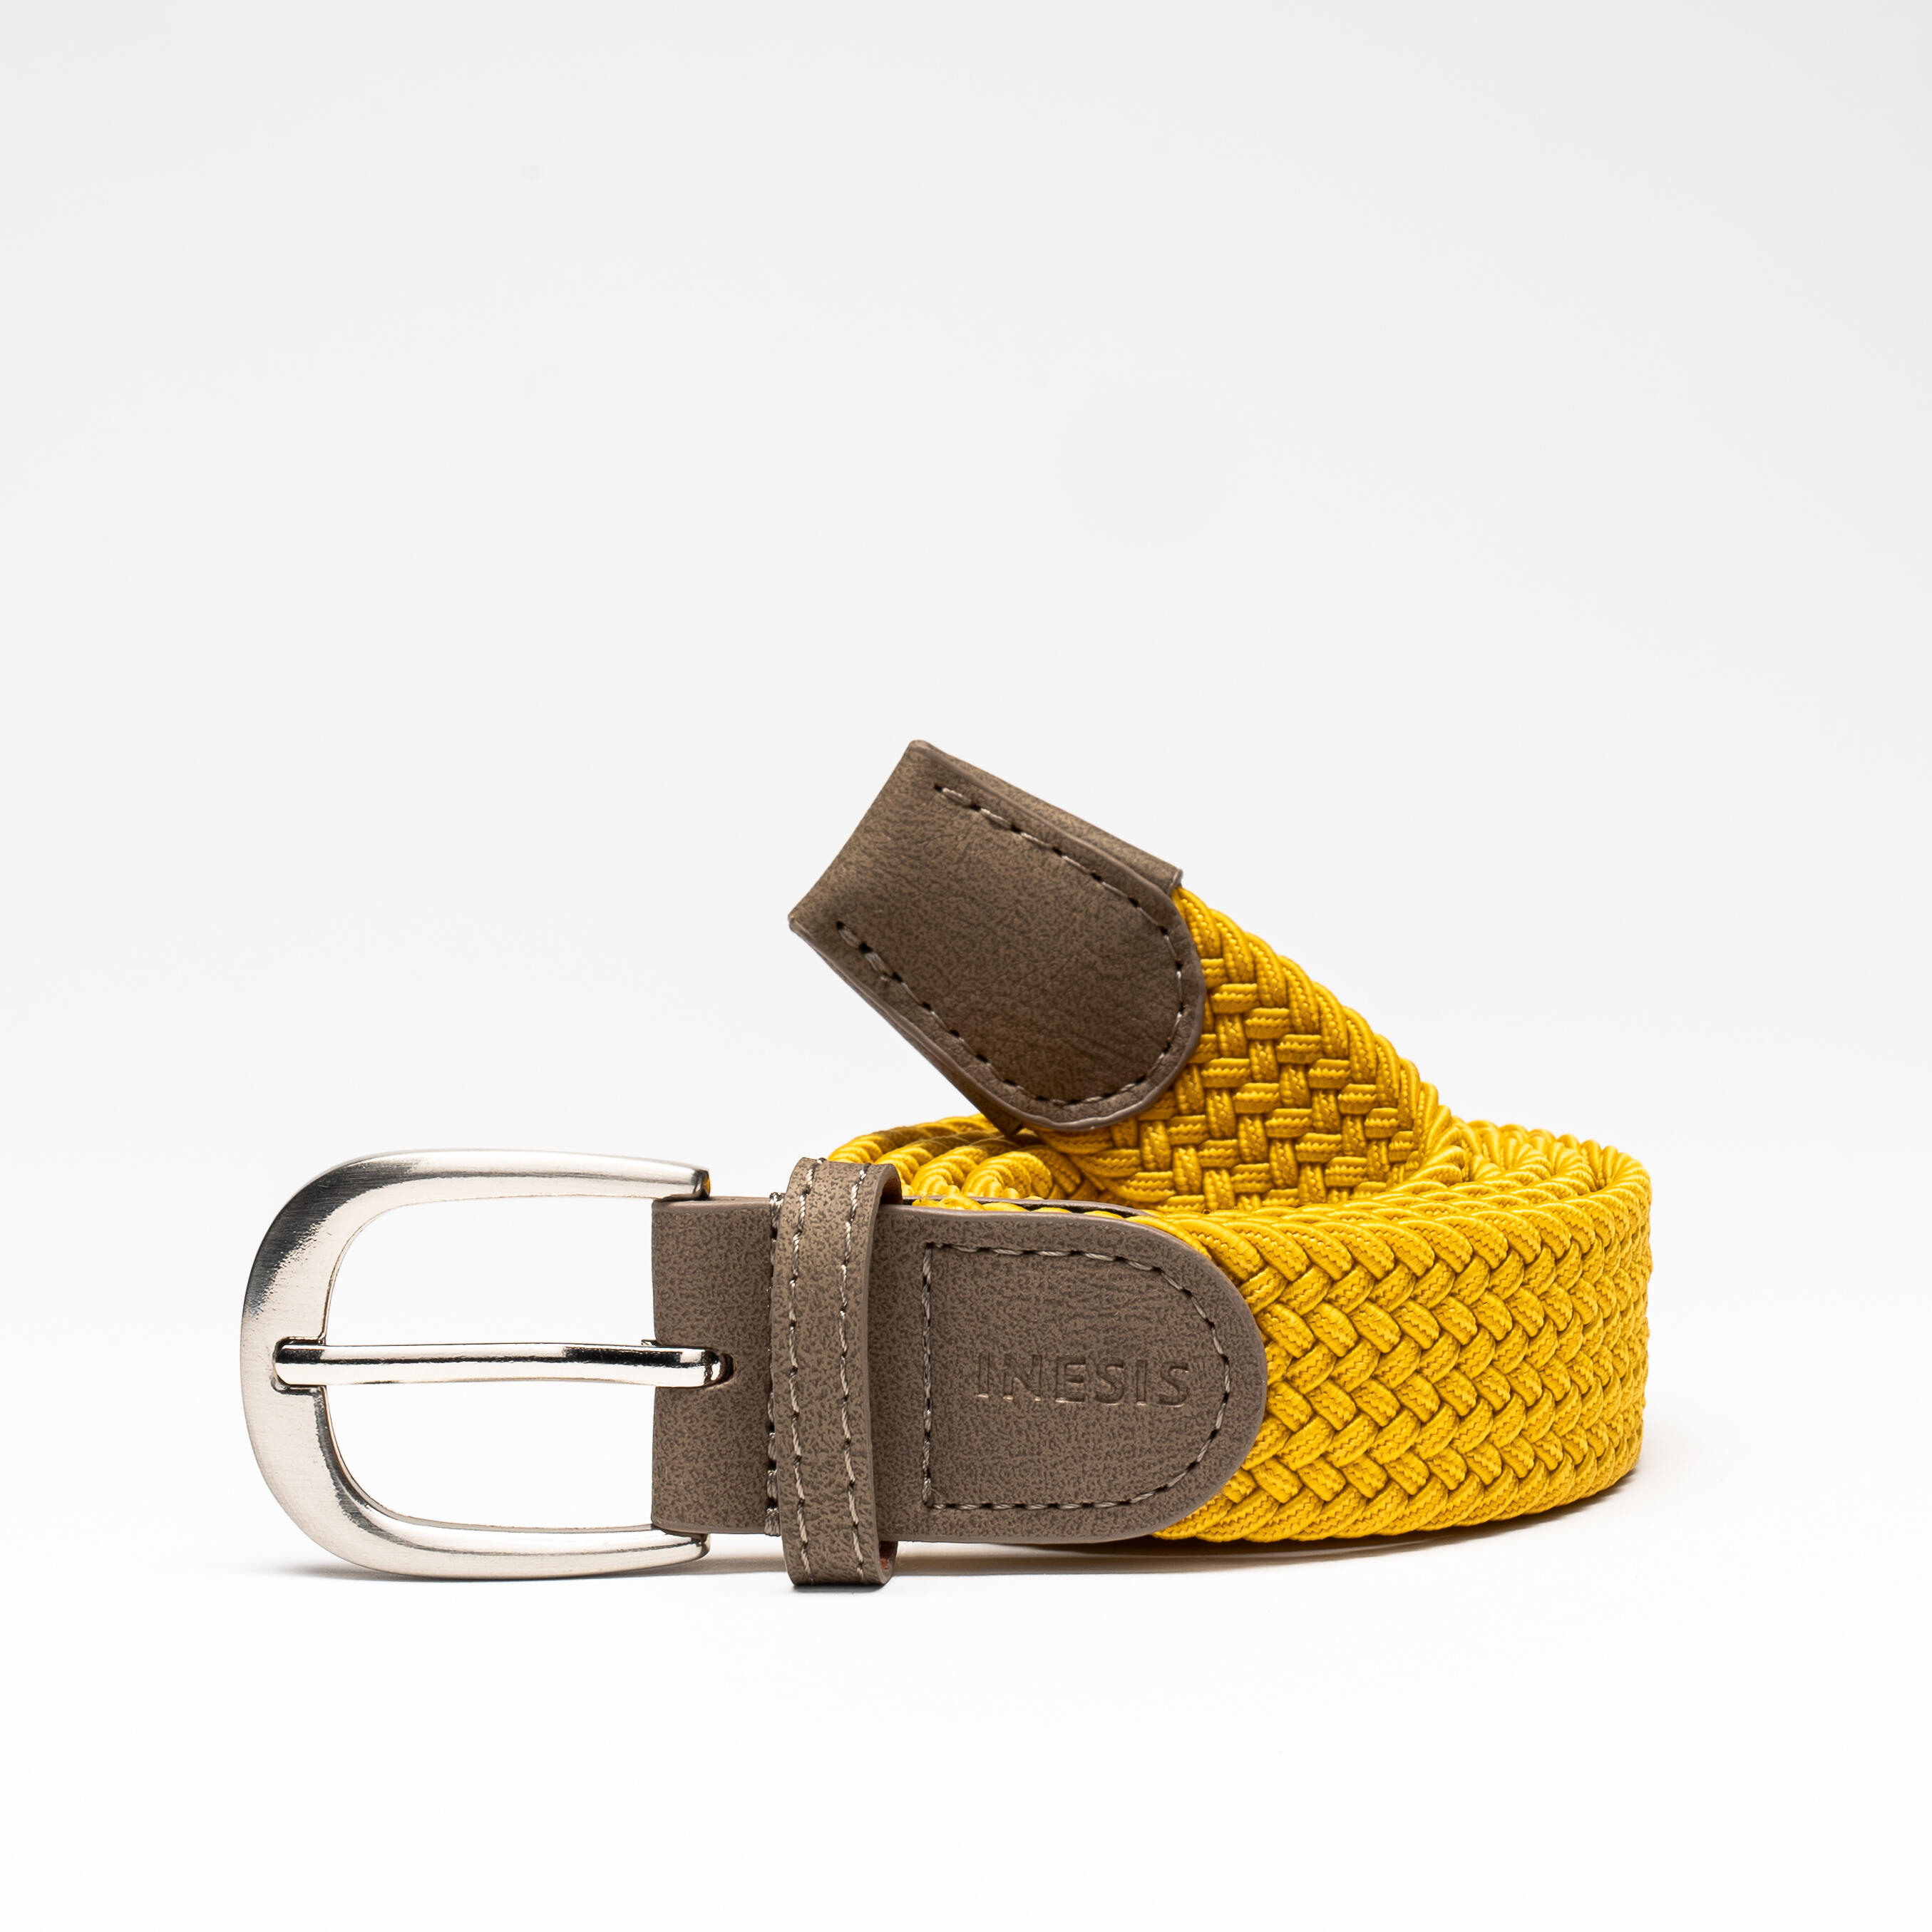 INESIS Golf Elastic & Stretchy Belt - Pastel Yellow